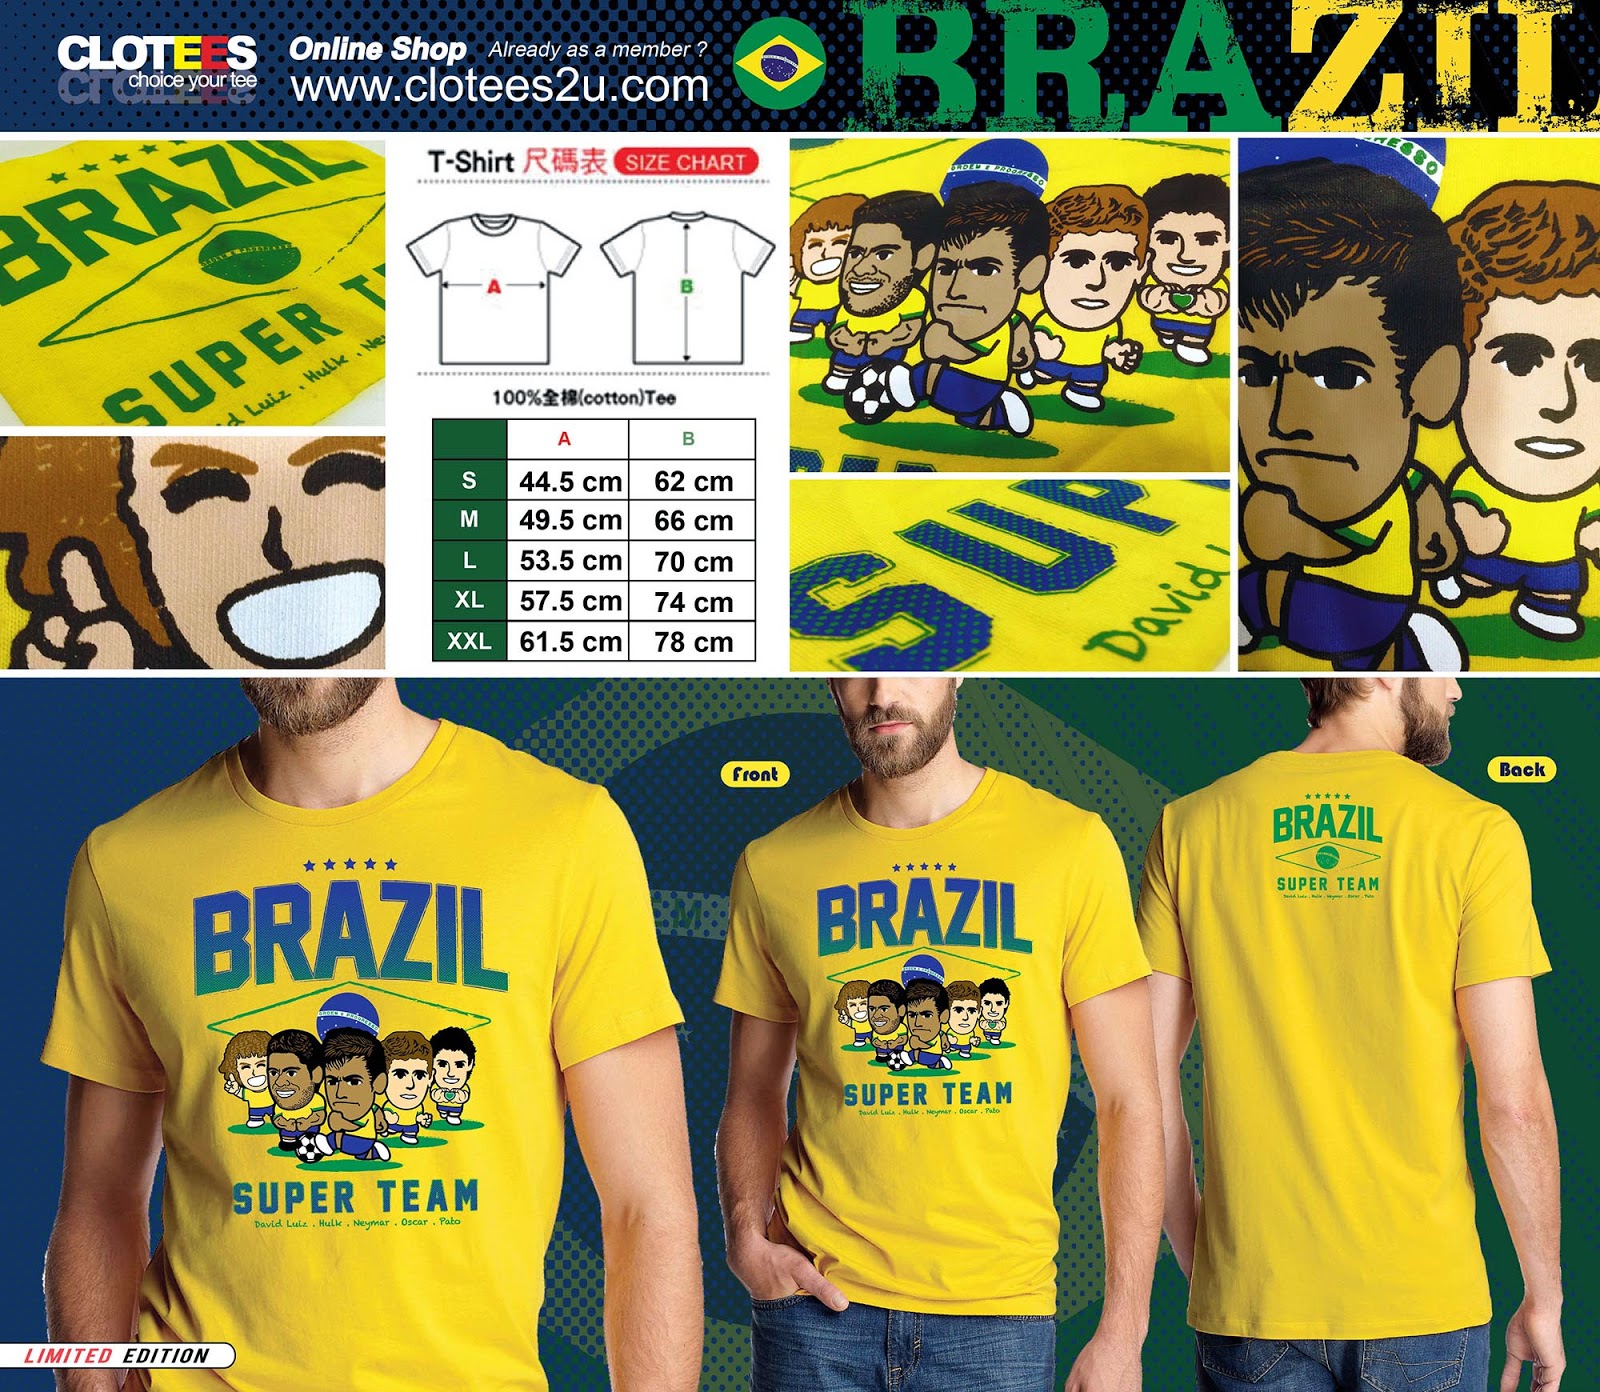  BRAZIL TEAM